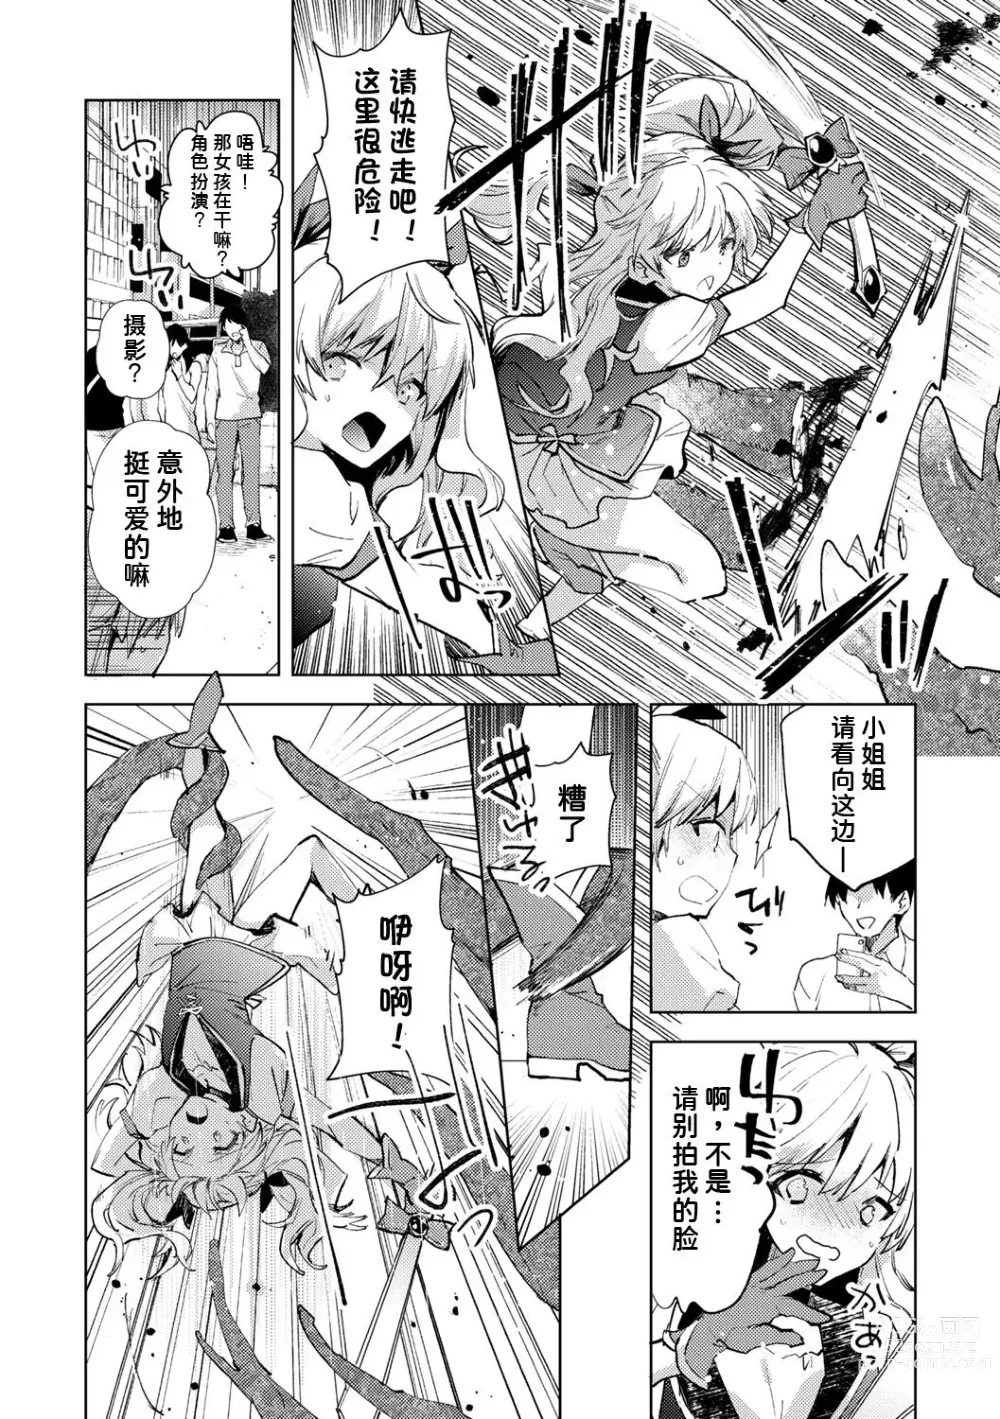 Page 2 of manga Mahou Shoujo Mai-chan